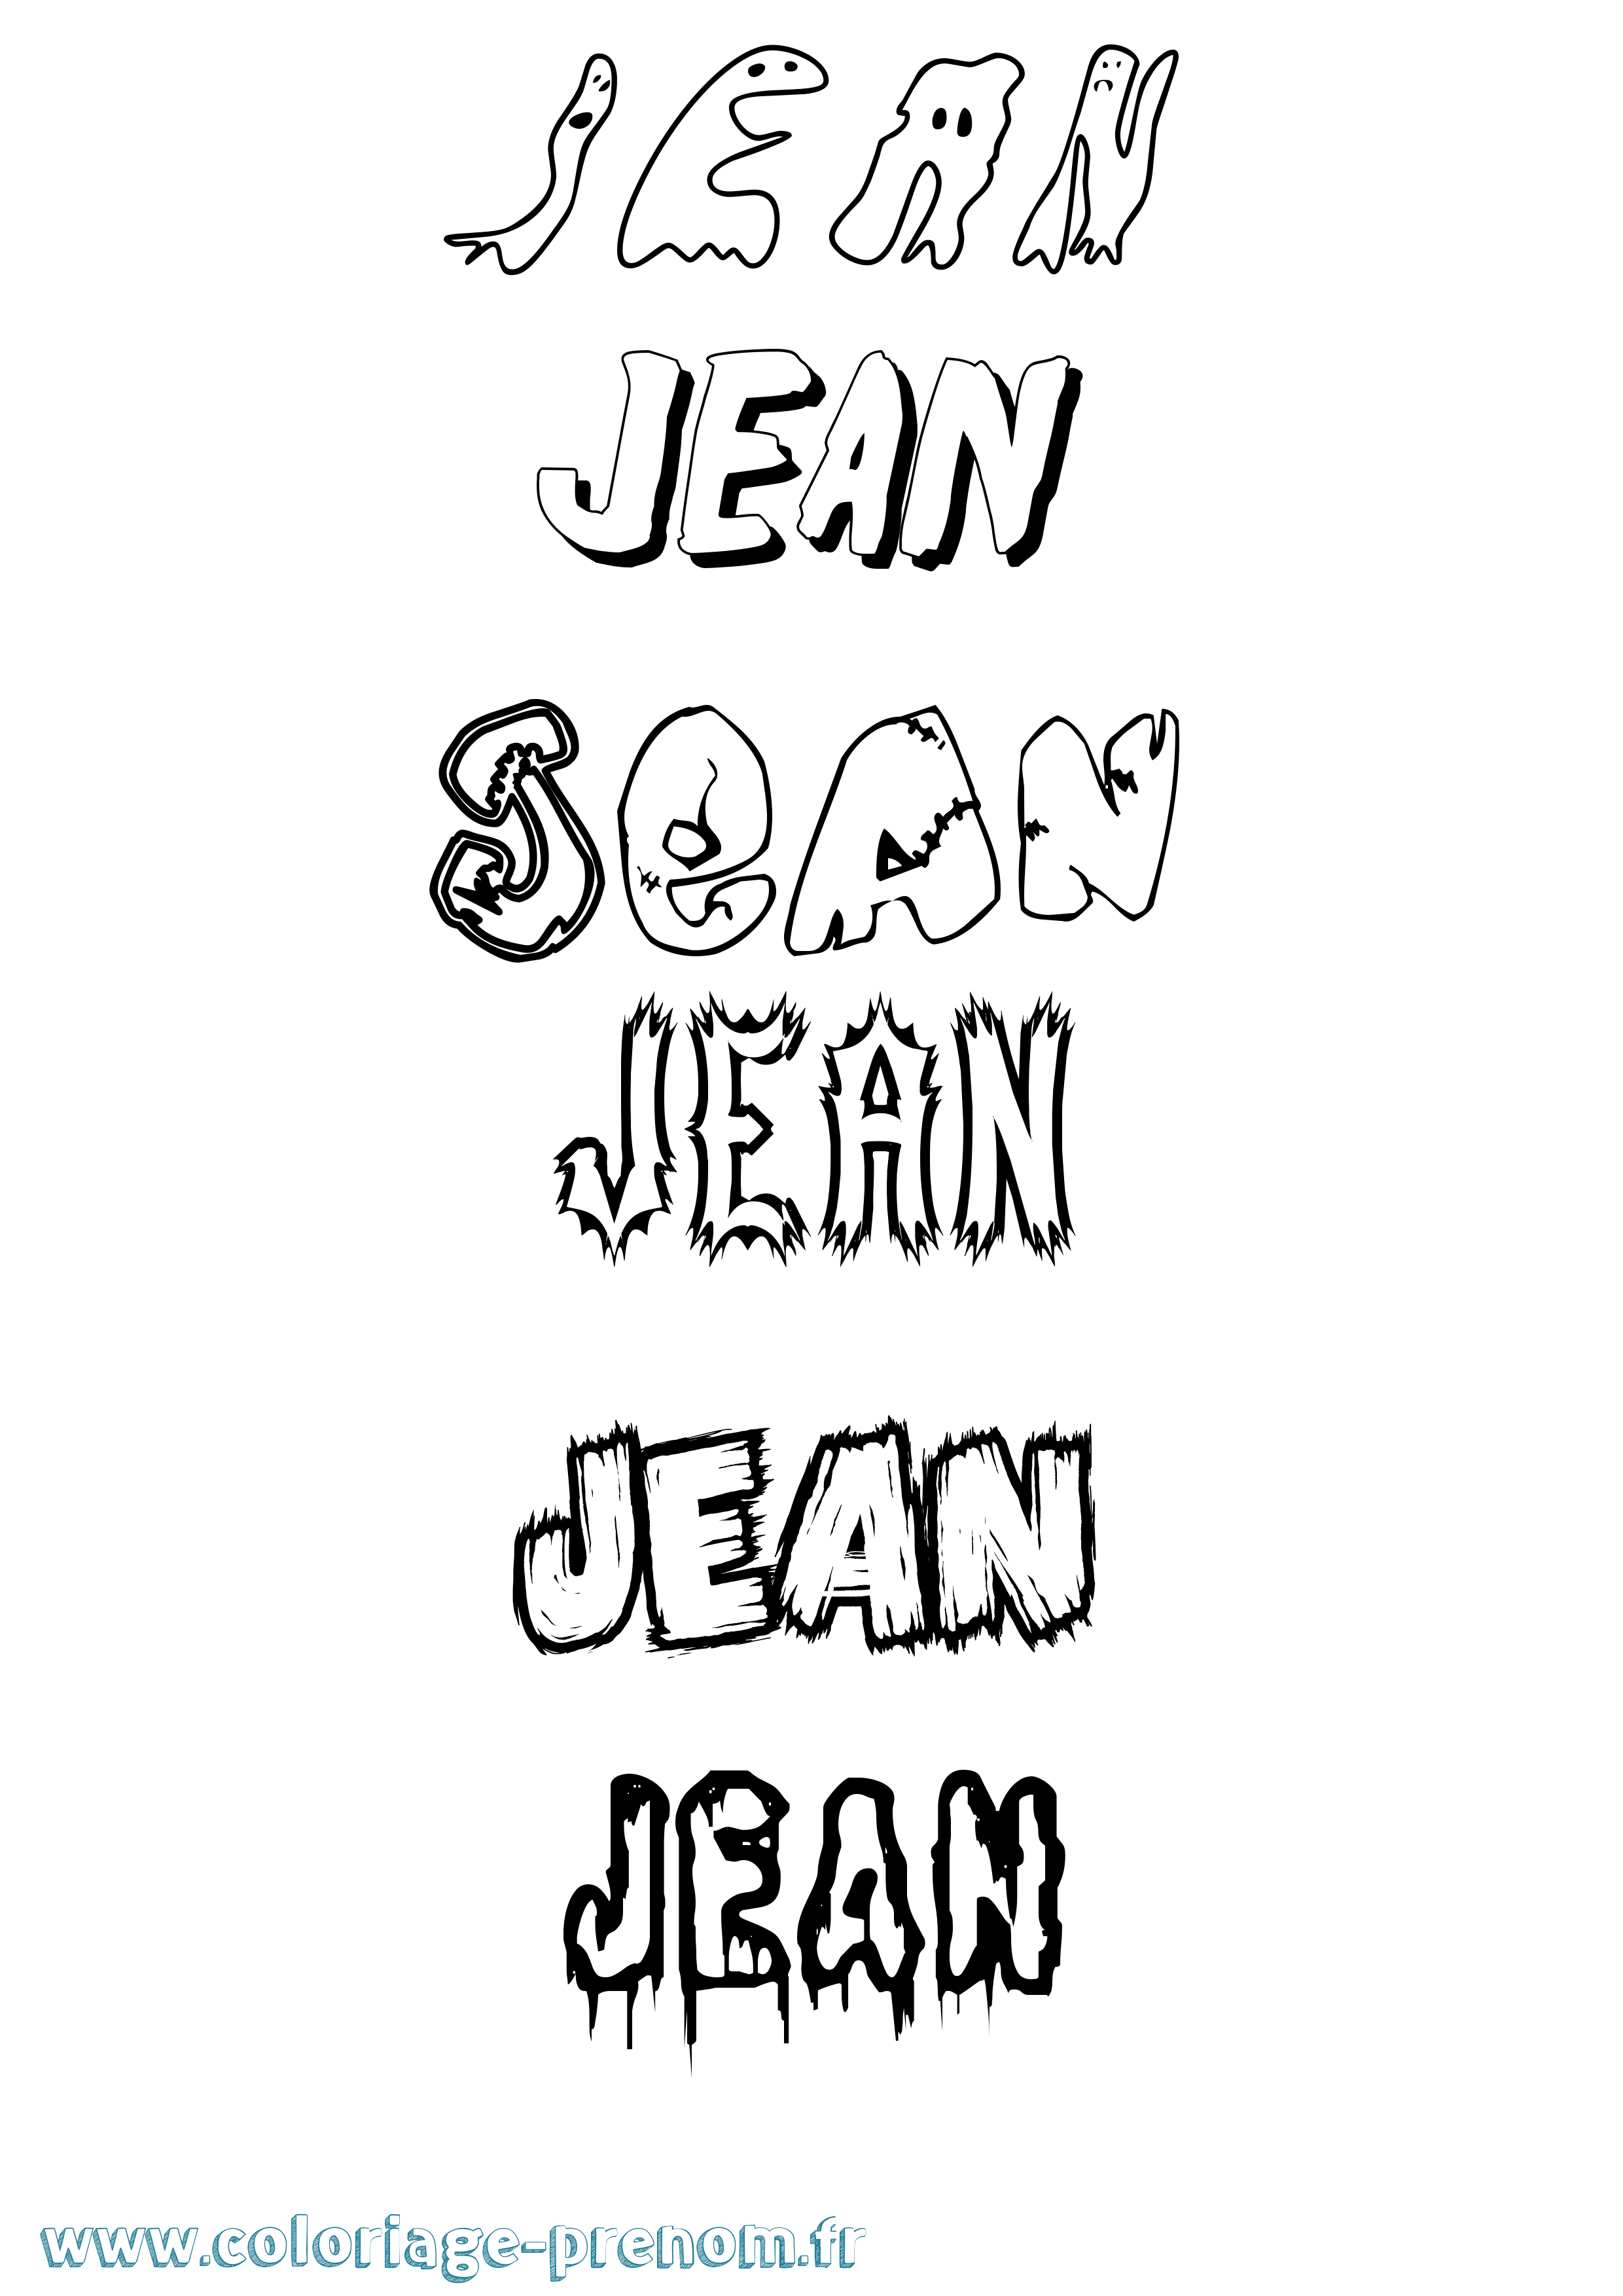 Coloriage prénom Jean Frisson